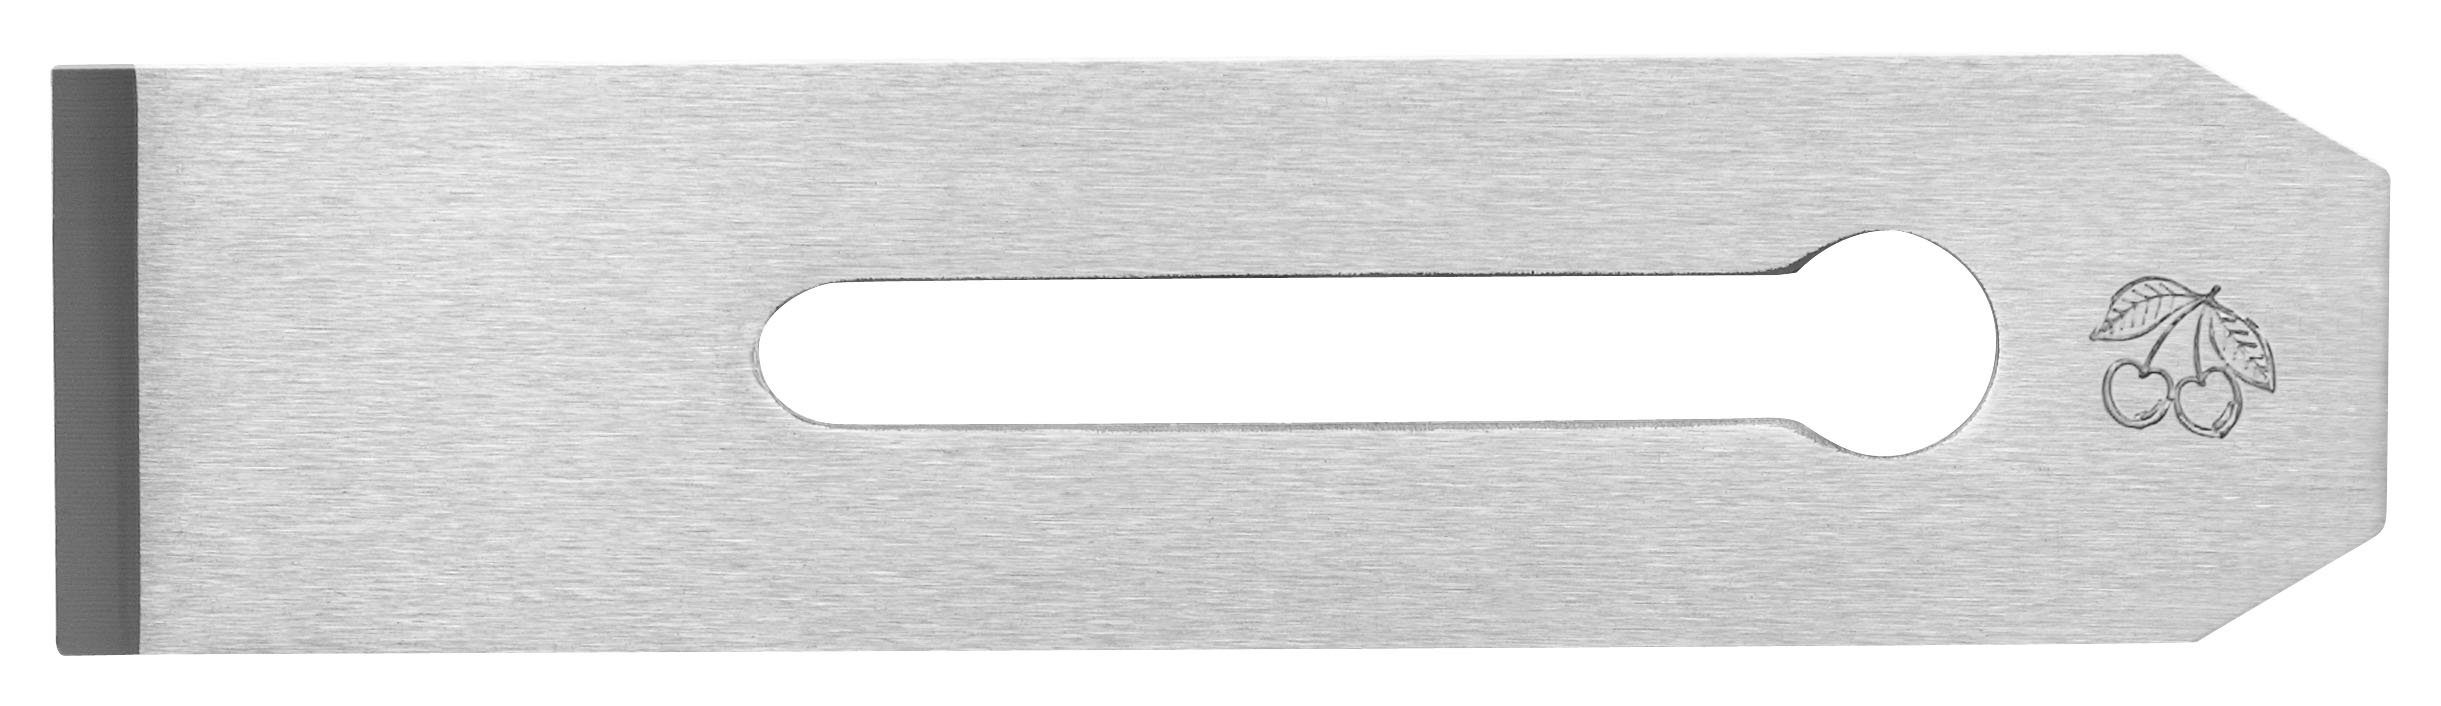 Kirschen Hobelmesser Lochhobeleisen 54mm - KIRSCHEN